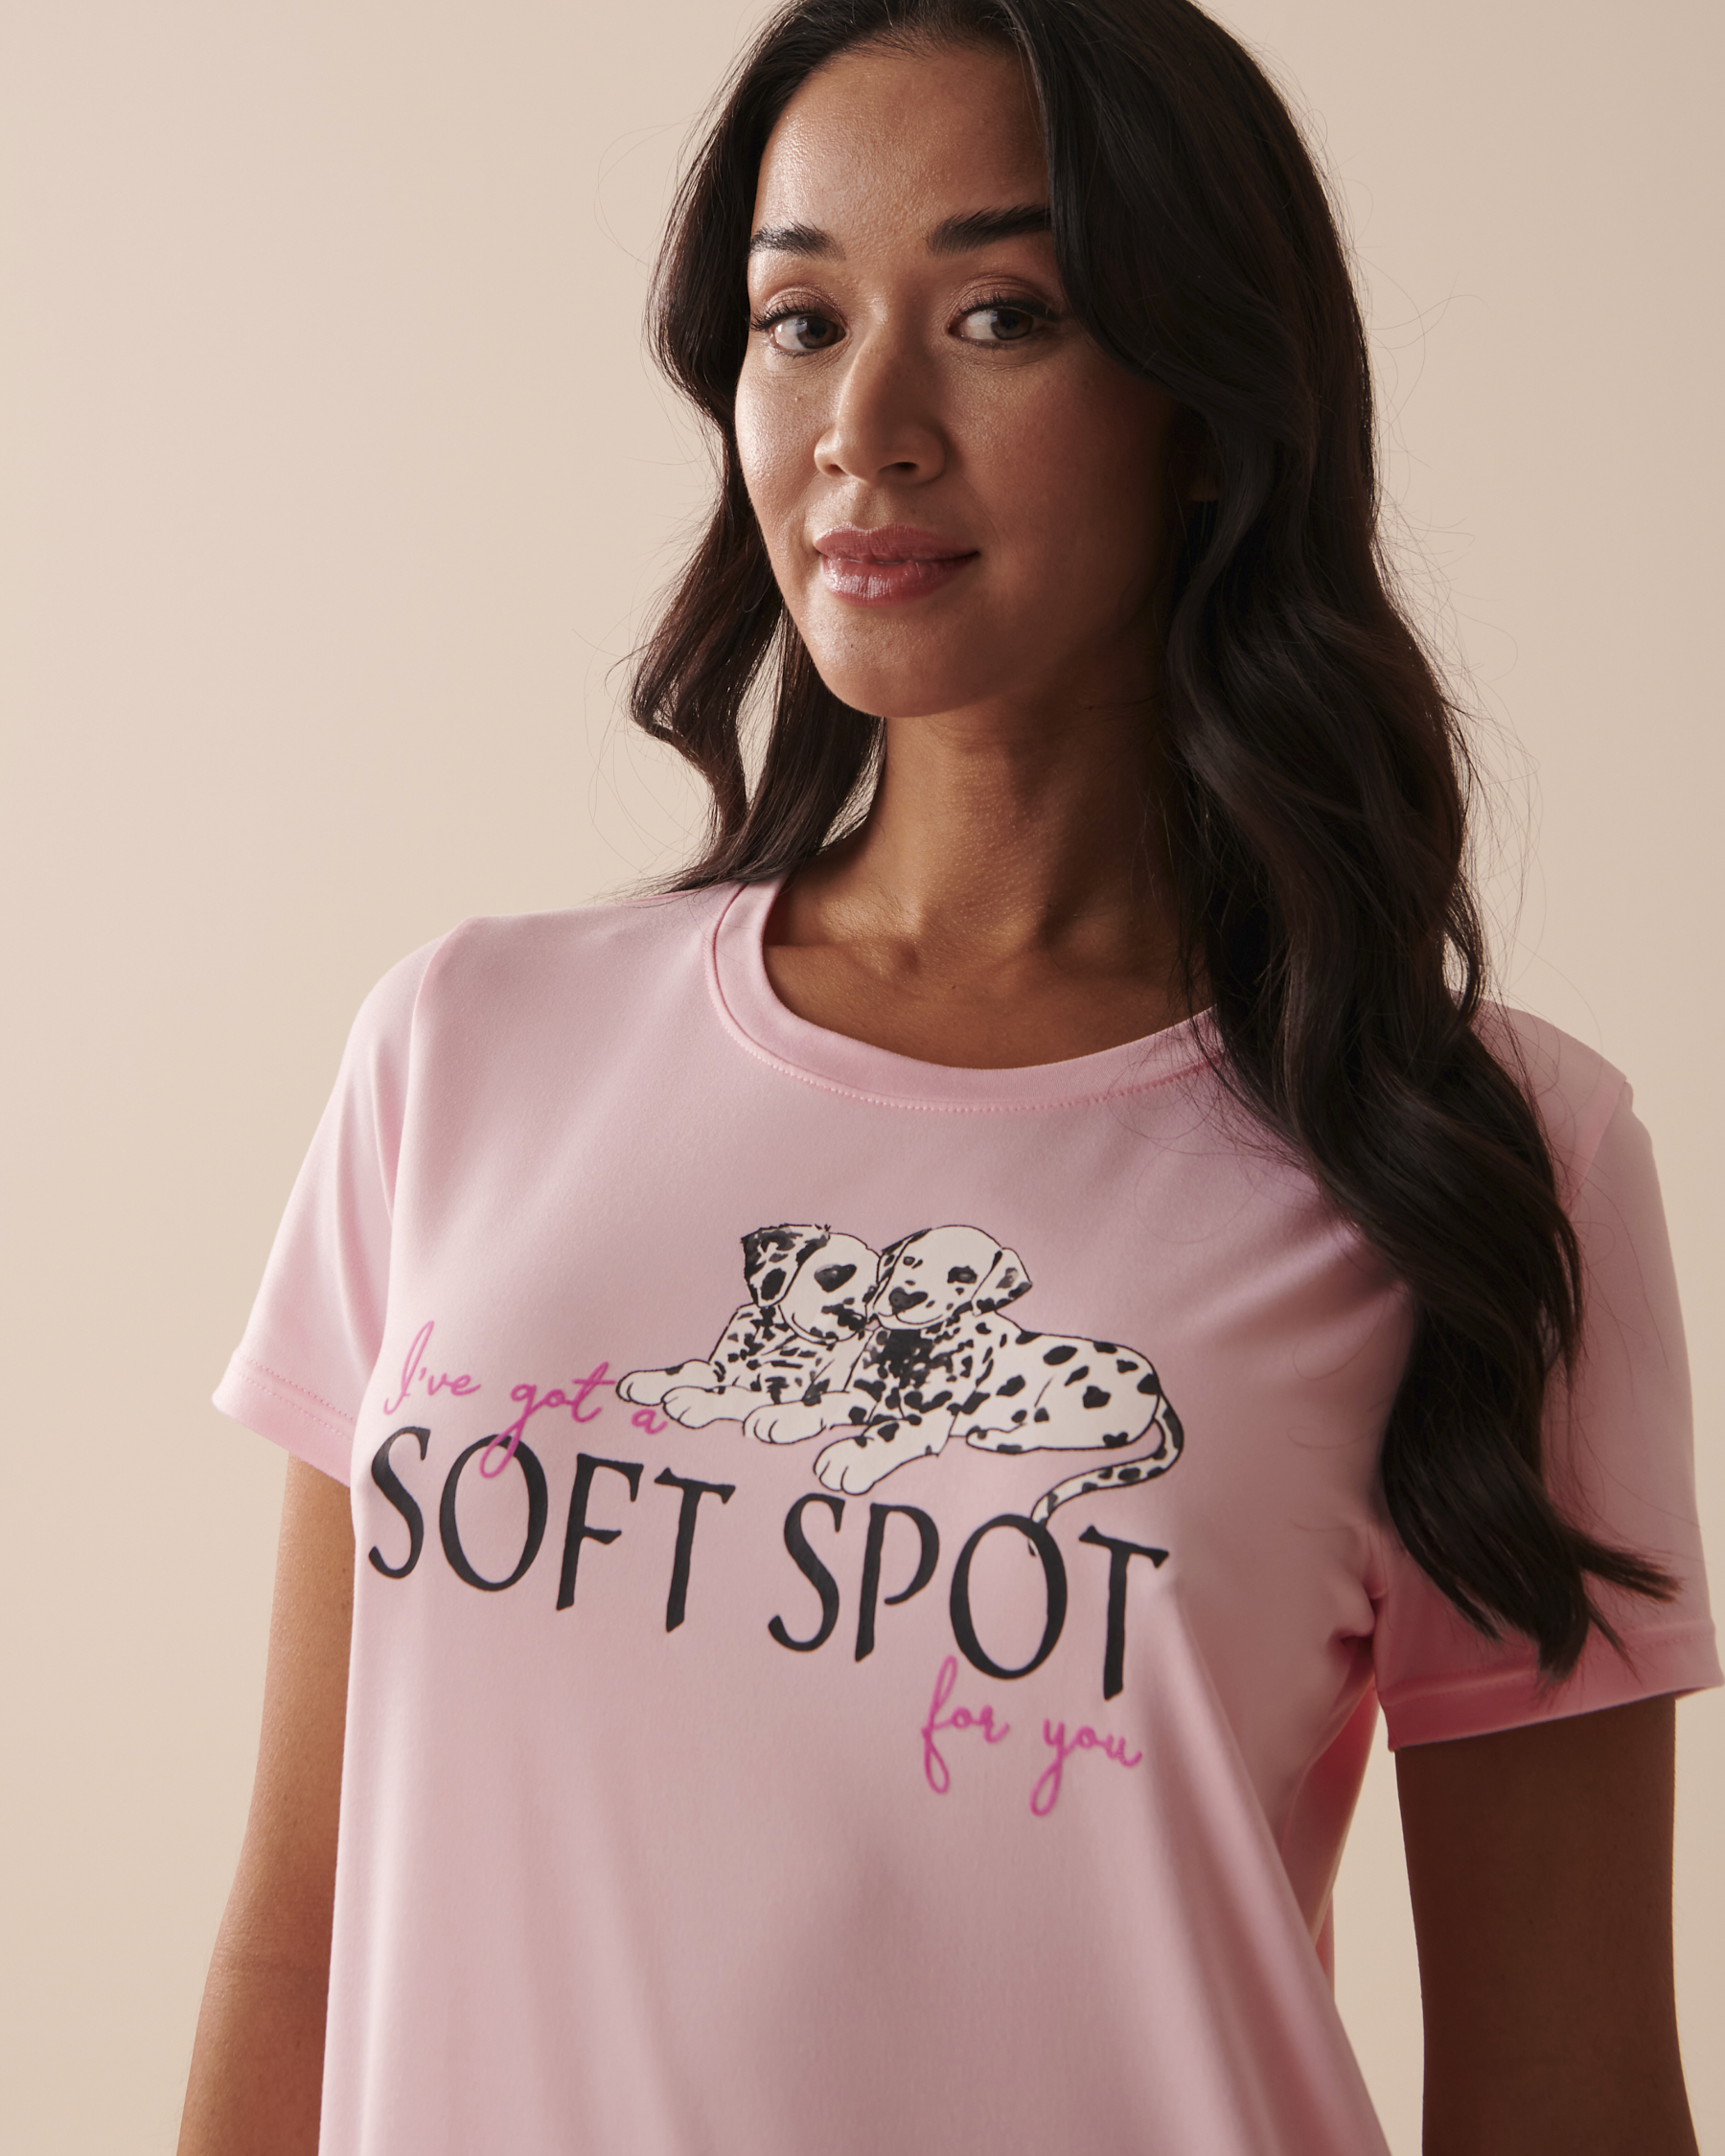 LA VIE EN ROSE Dalmatians Super Soft Sleepshirt Tender Pink 40500328 - View3